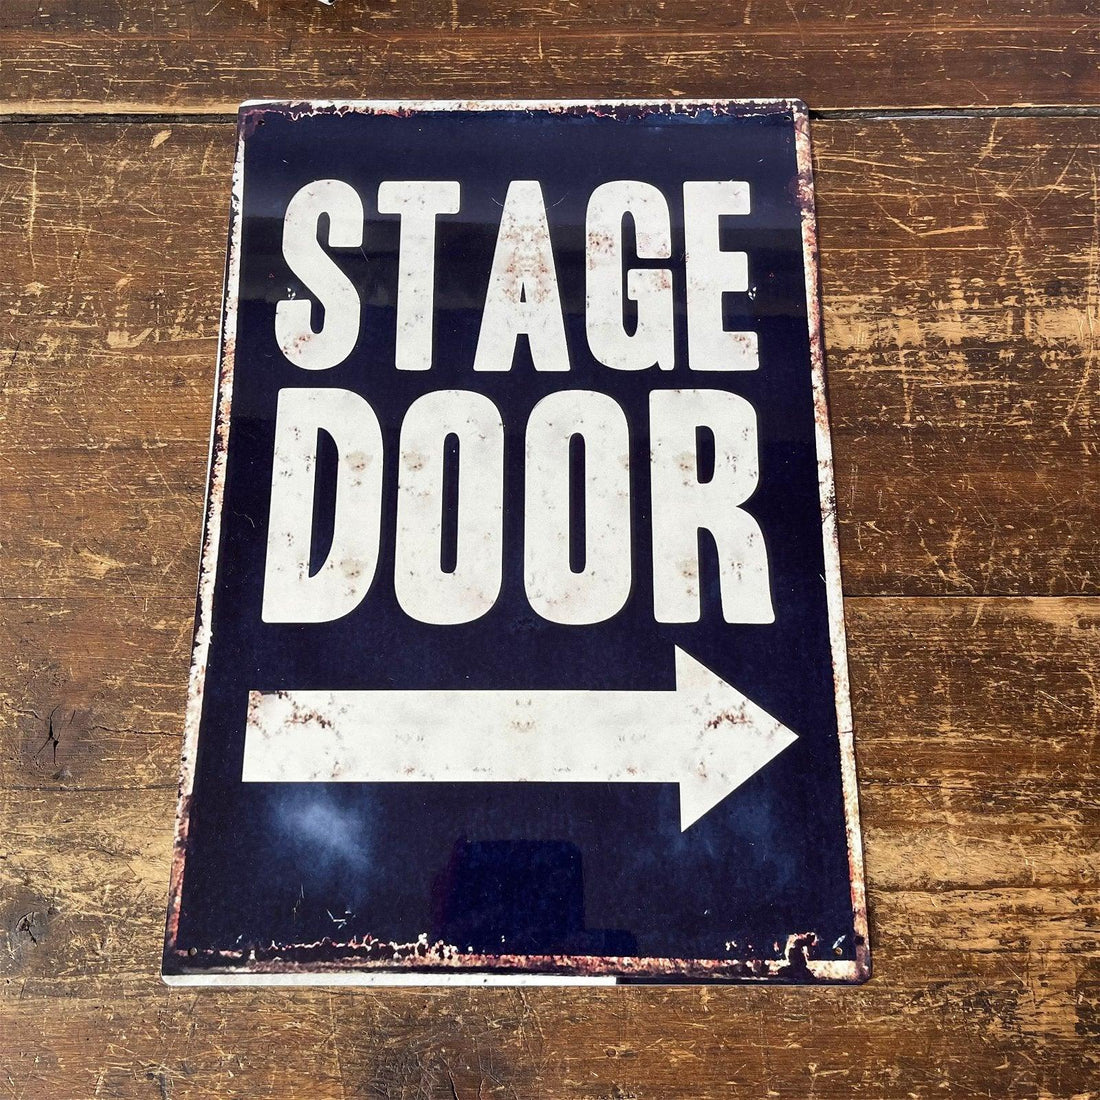 Vintage Metal Sign - Stage Door Metal Wall Sign - £27.99 - Signs & Rules 